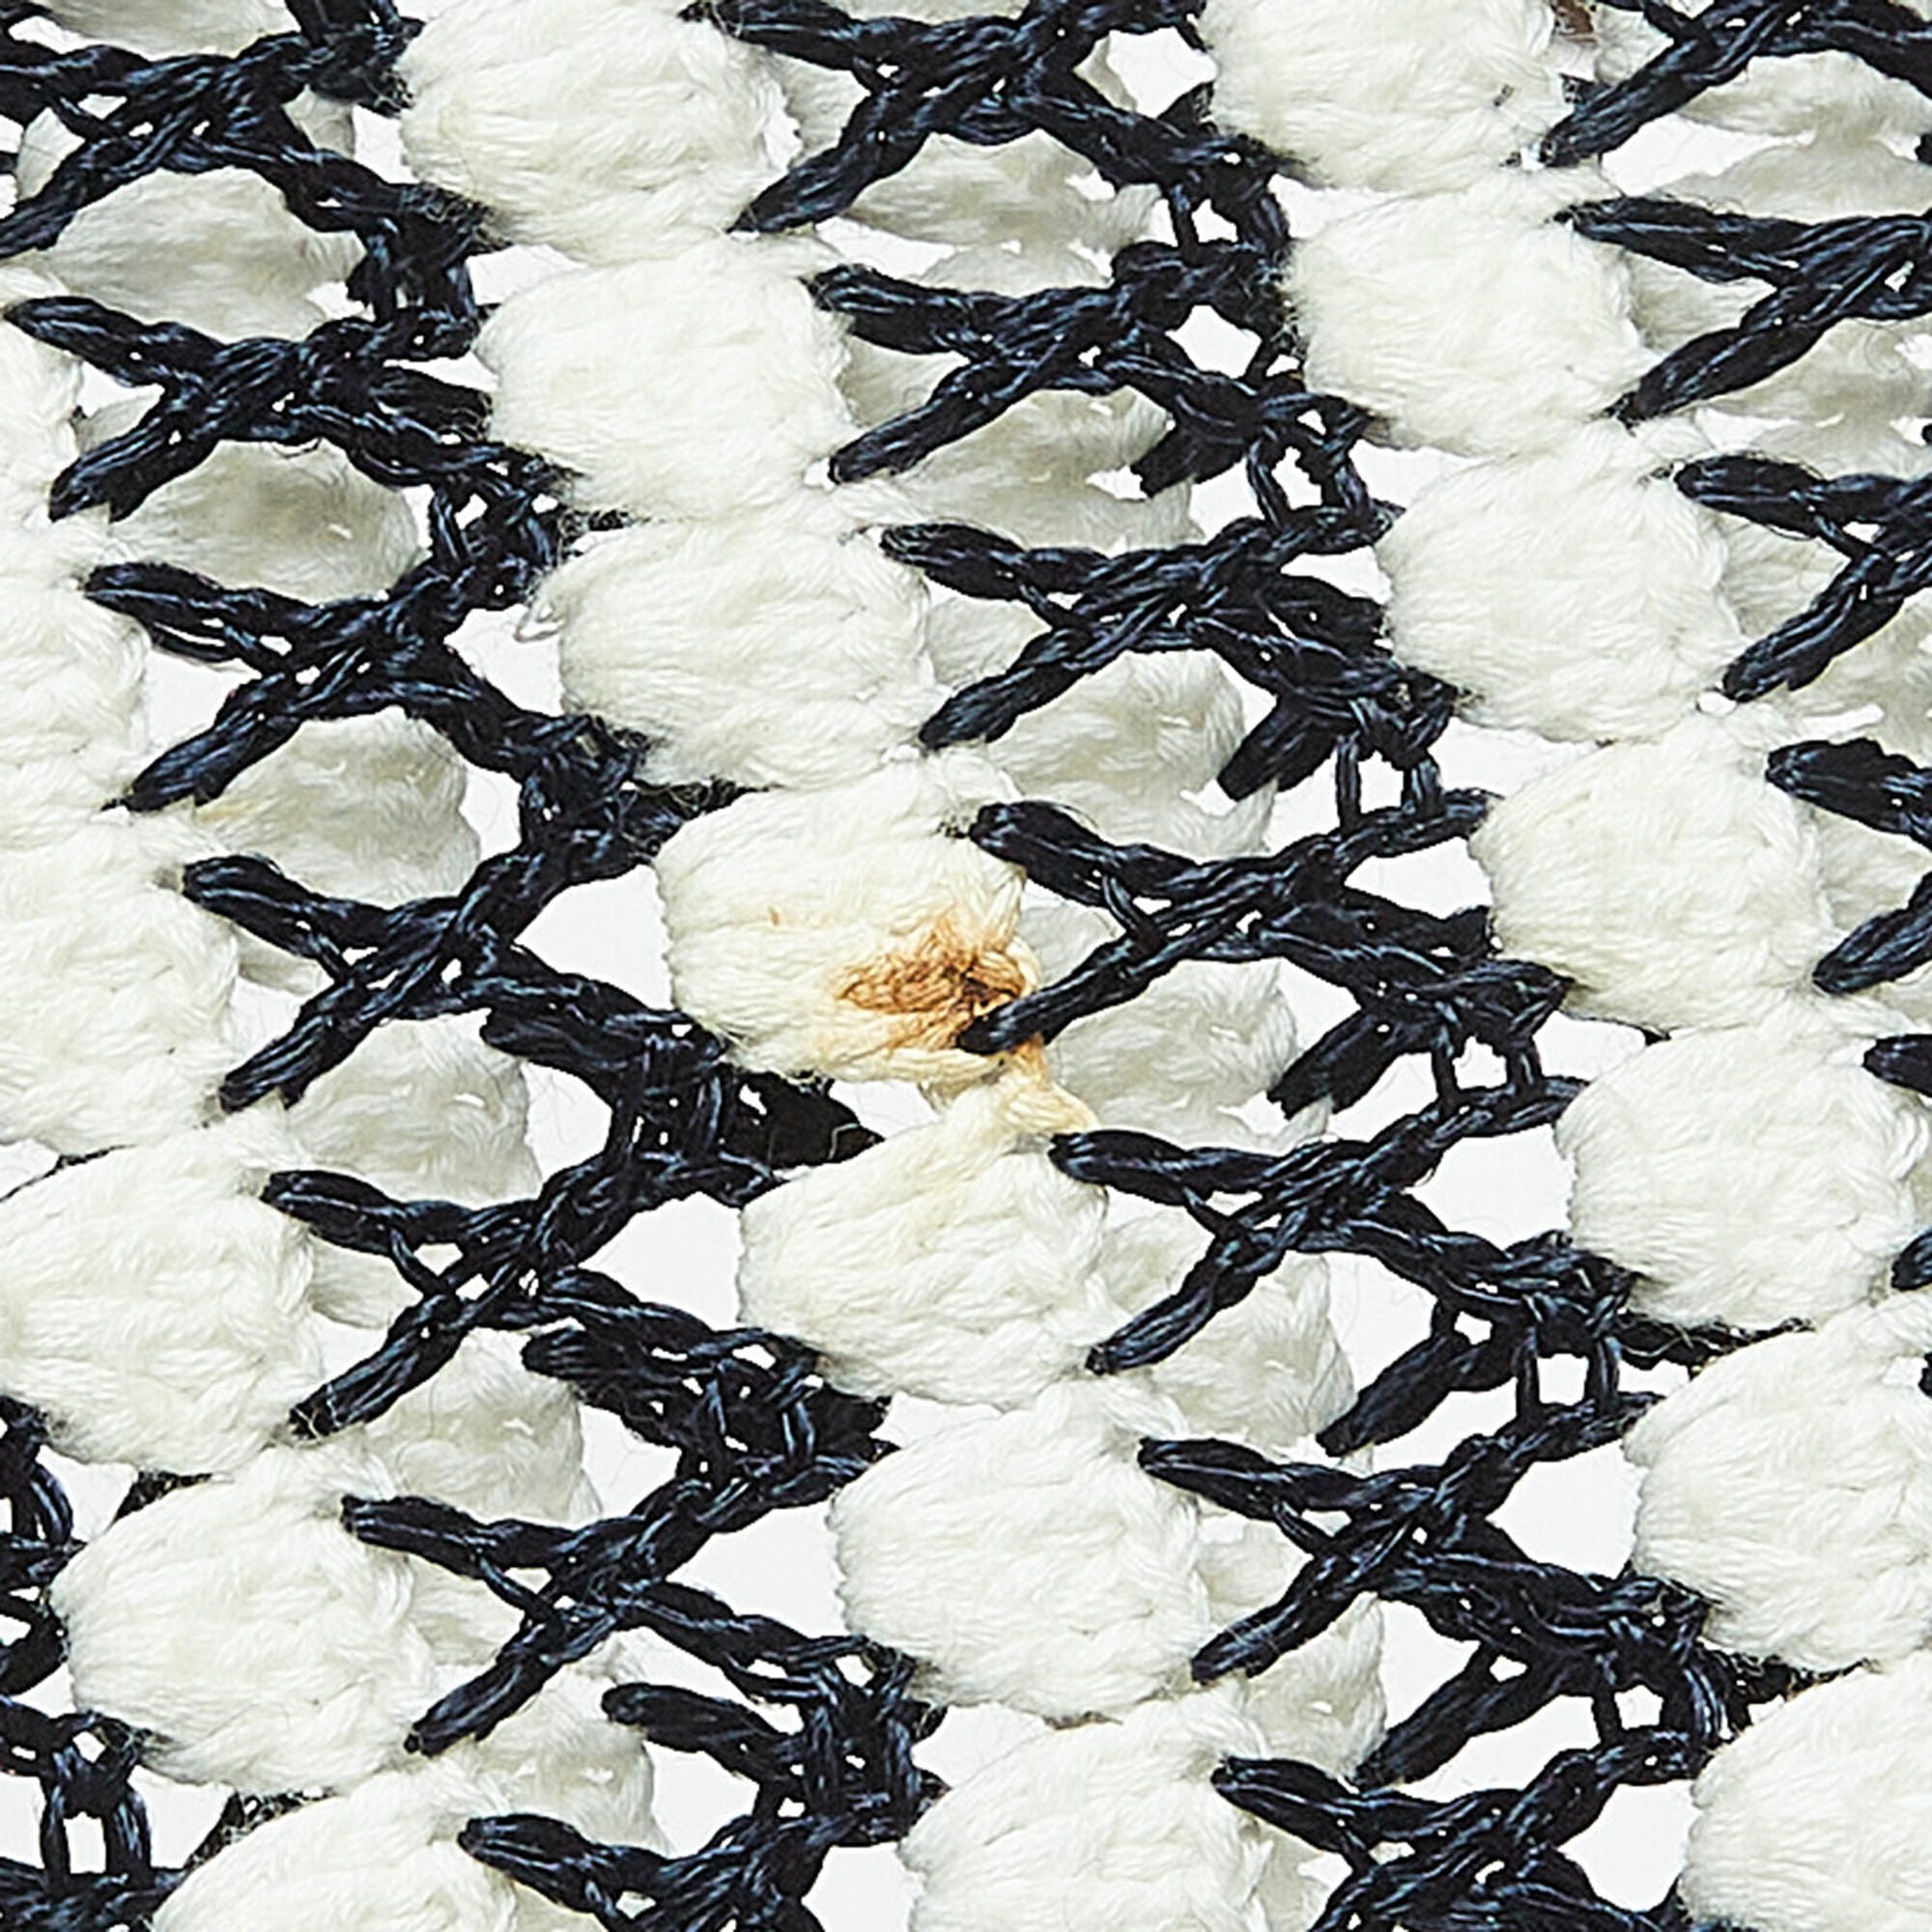 Diane Von Furstenberg Navy Blue/White Crochet Knit Sleeveless Short Dress S